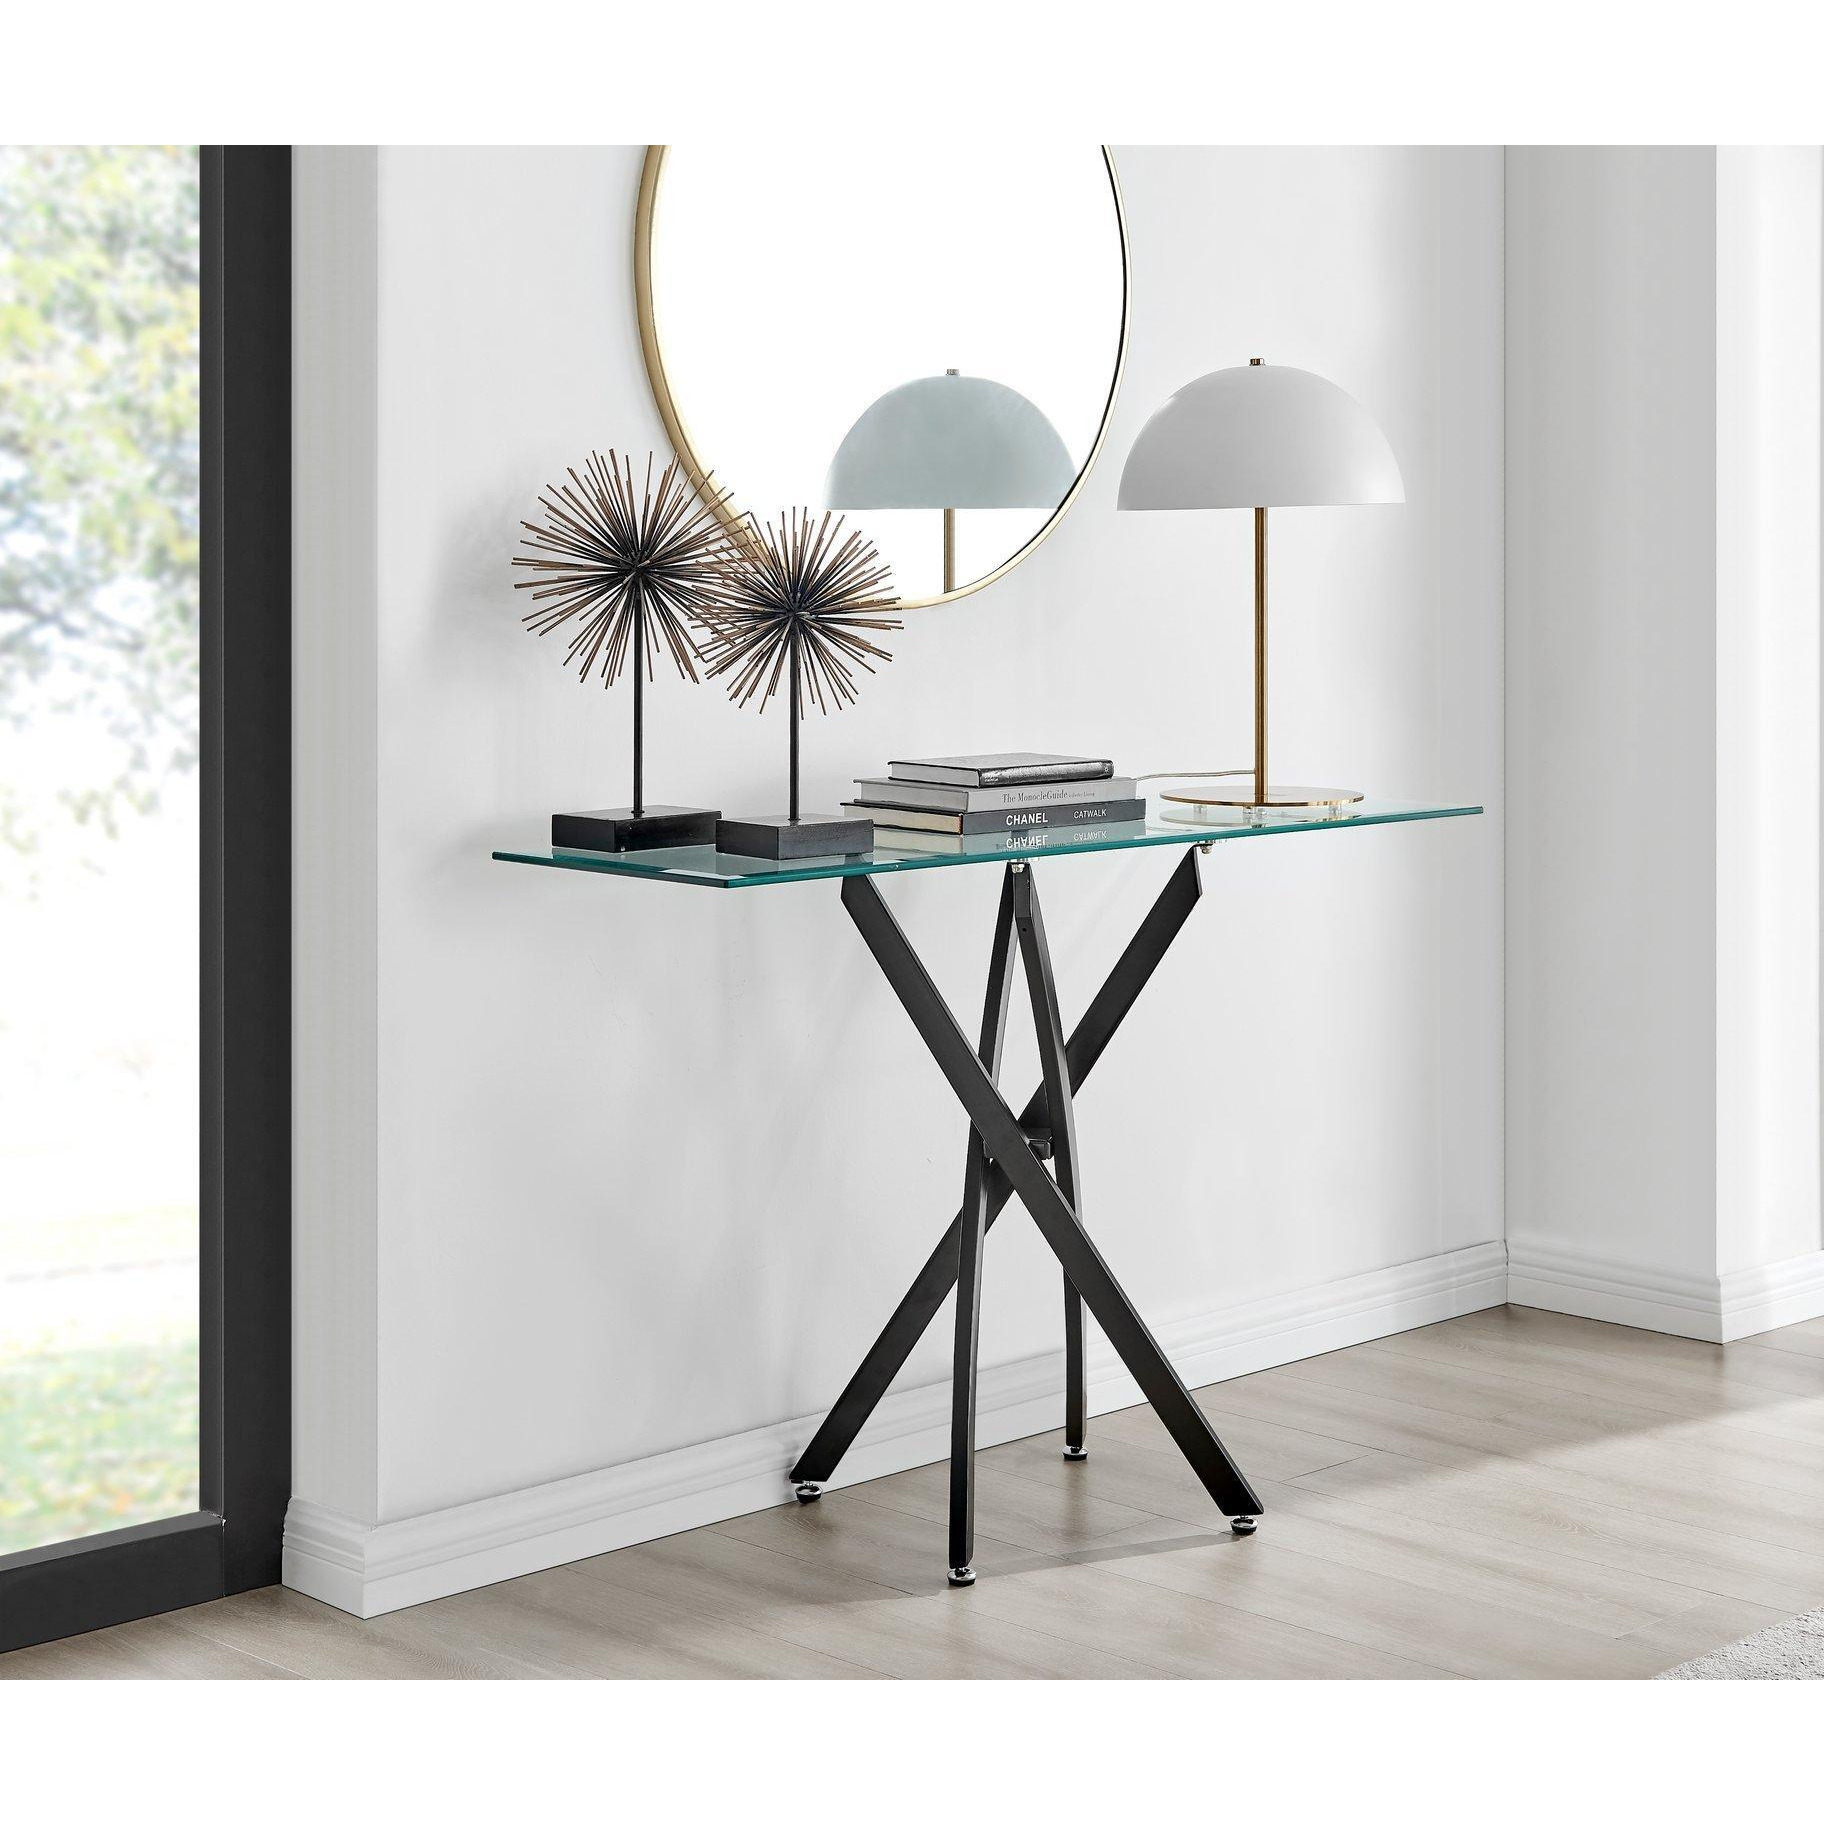 Leonardo Rectangular Glass Console Table with Metal Angled Starburst Legs for Modern Living Room - image 1